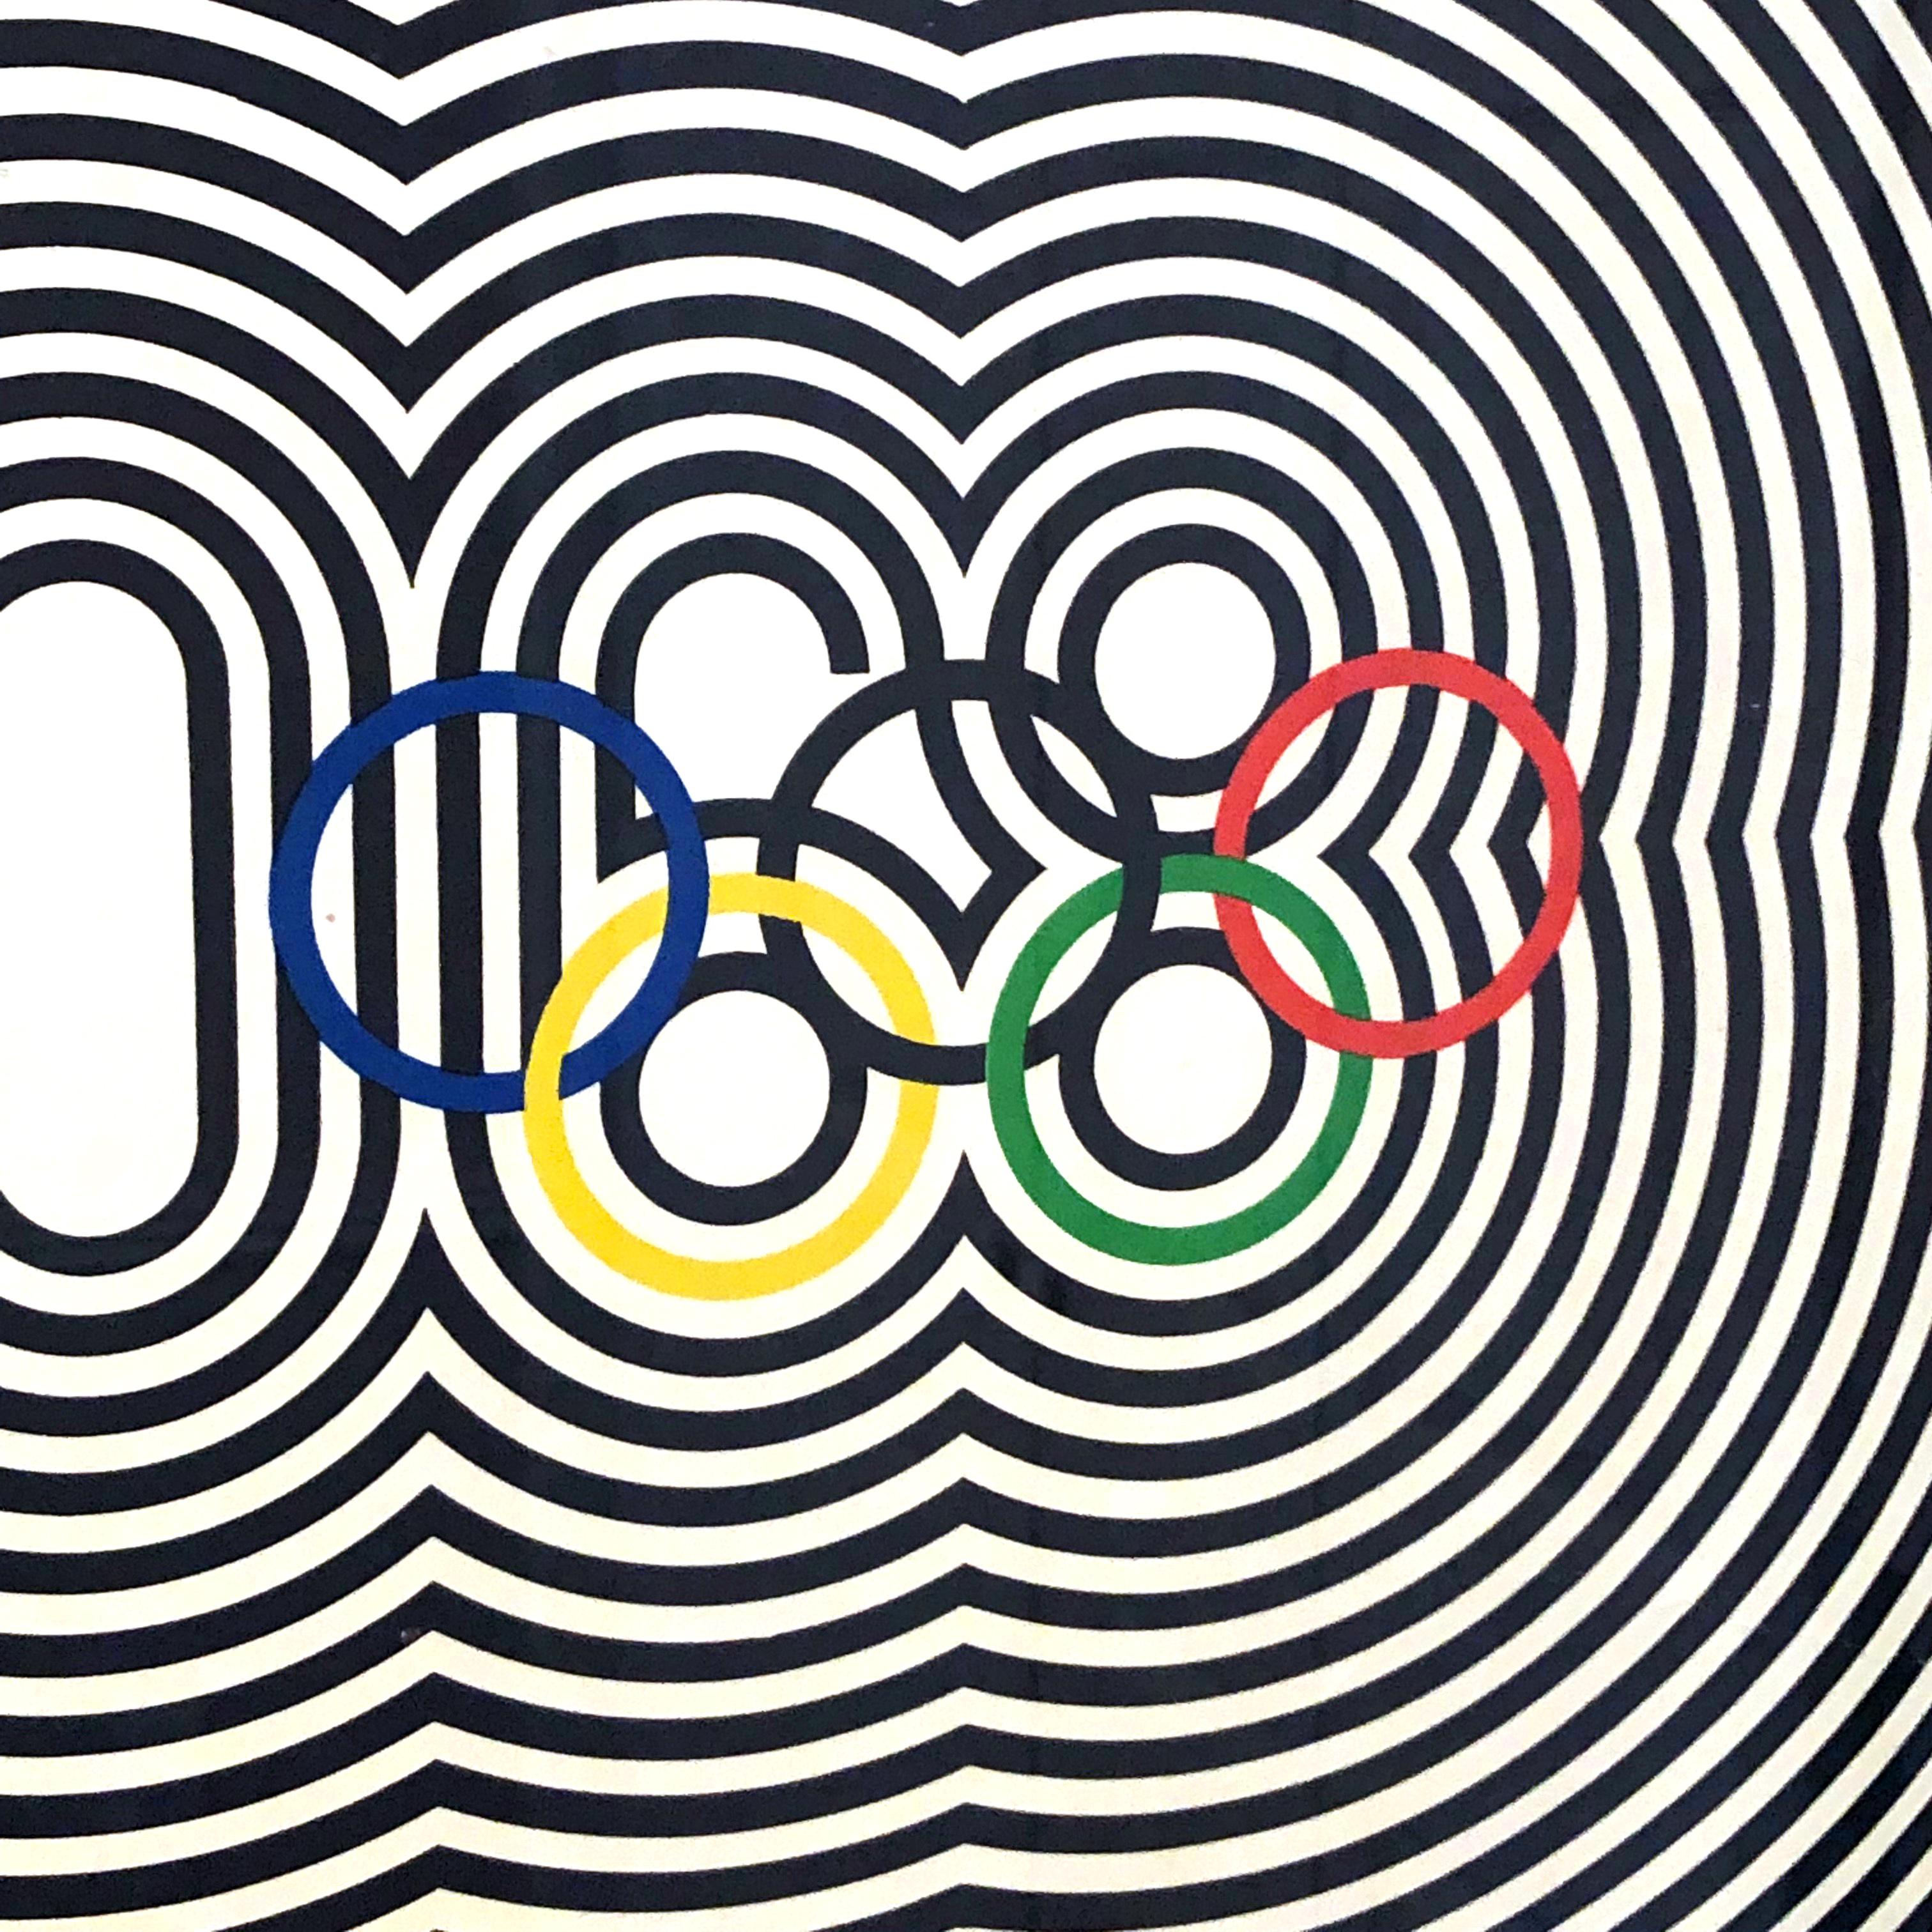 1968 olympics poster